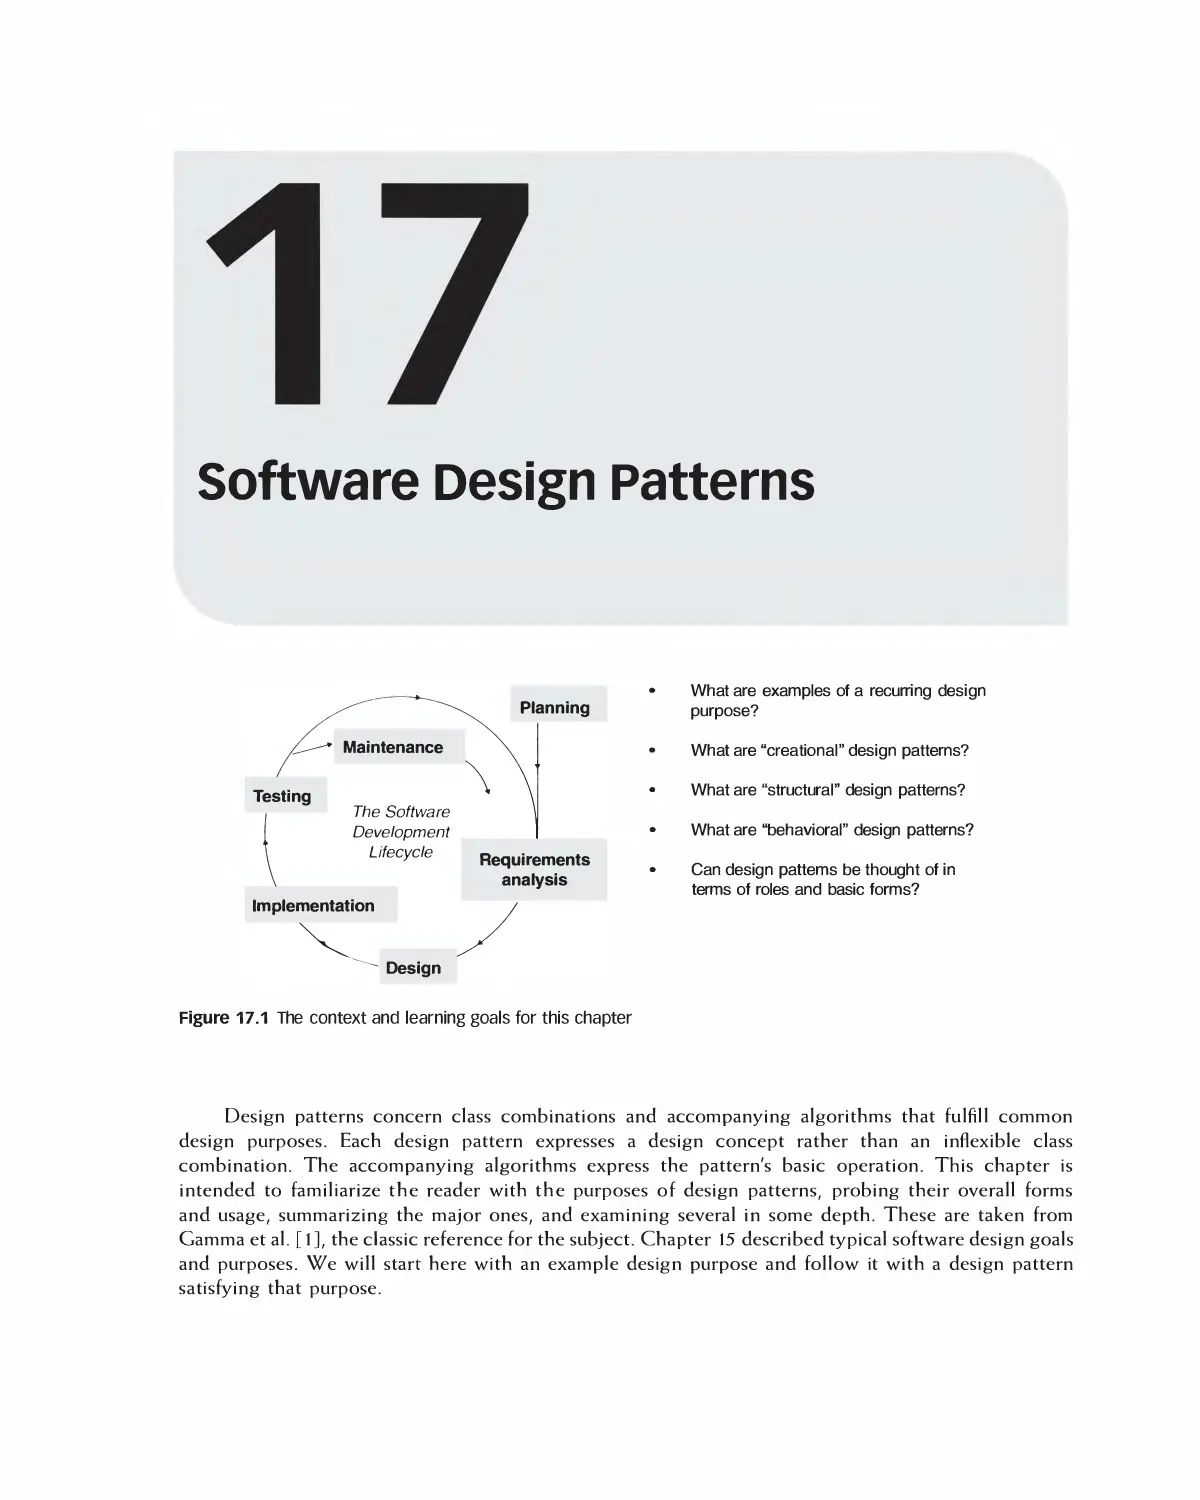 Chaper 17: Software Design Patterns